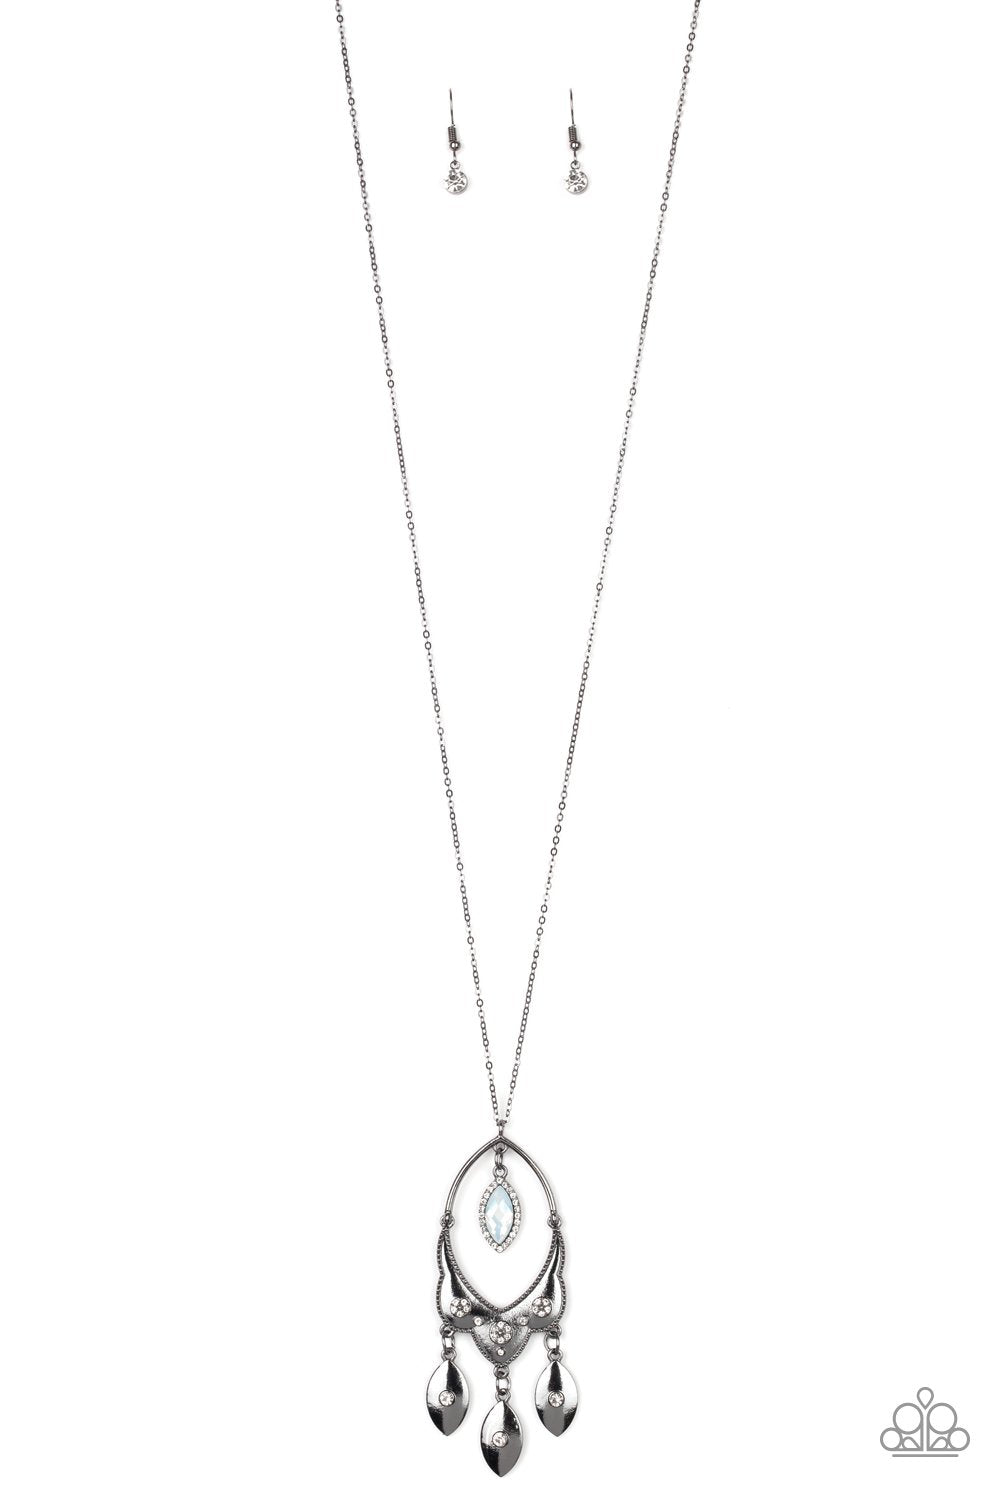 Royal Iridescence Gunmetal Black Necklace - Paparazzi Accessories - lightbox -CarasShop.com - $5 Jewelry by Cara Jewels